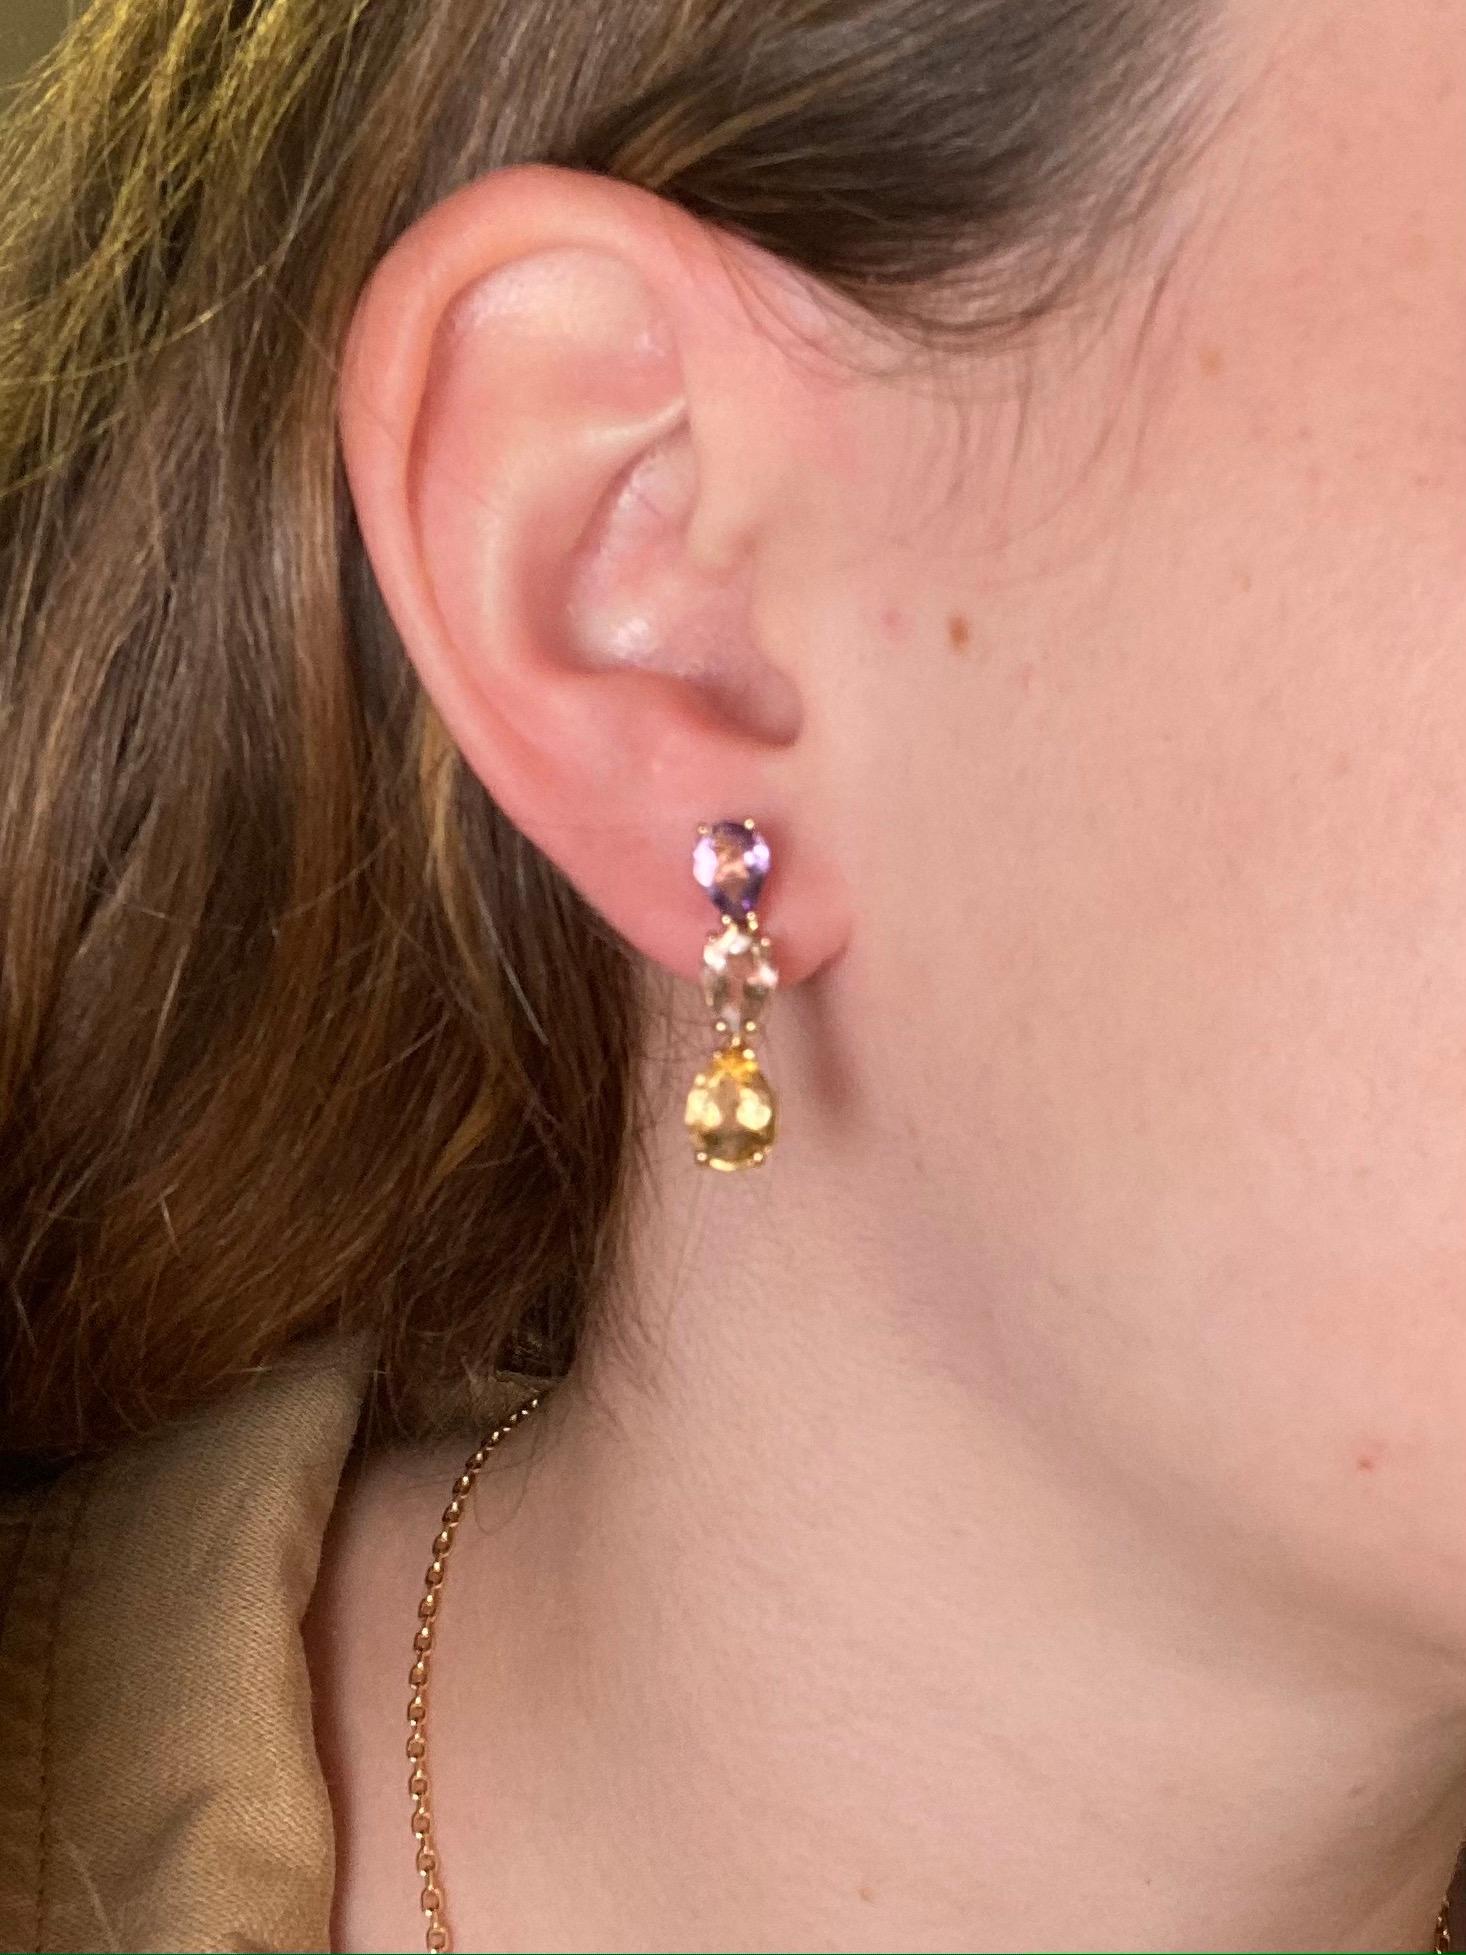 amethyst and citrine earrings